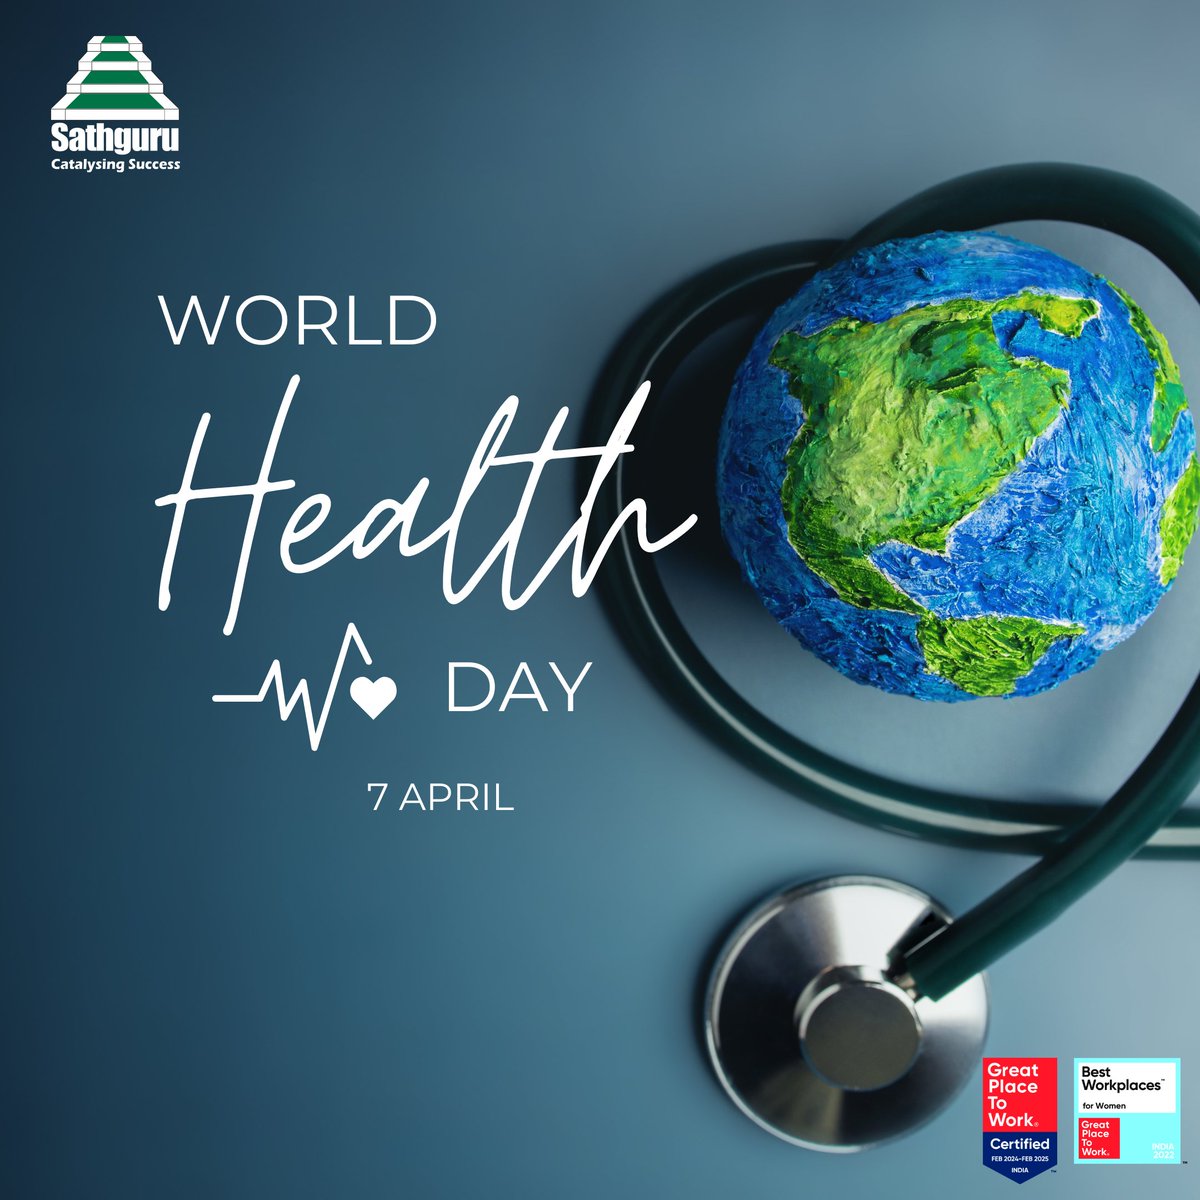 Let's unite for a healthier world this World Health Day! 💪🌍

#WorldHealthDay #HealthForAll #sathgurumc #smc #consulting #agribusiness #healthcare #foodretail #awareness #gptw #bestplacestoworkforwomen